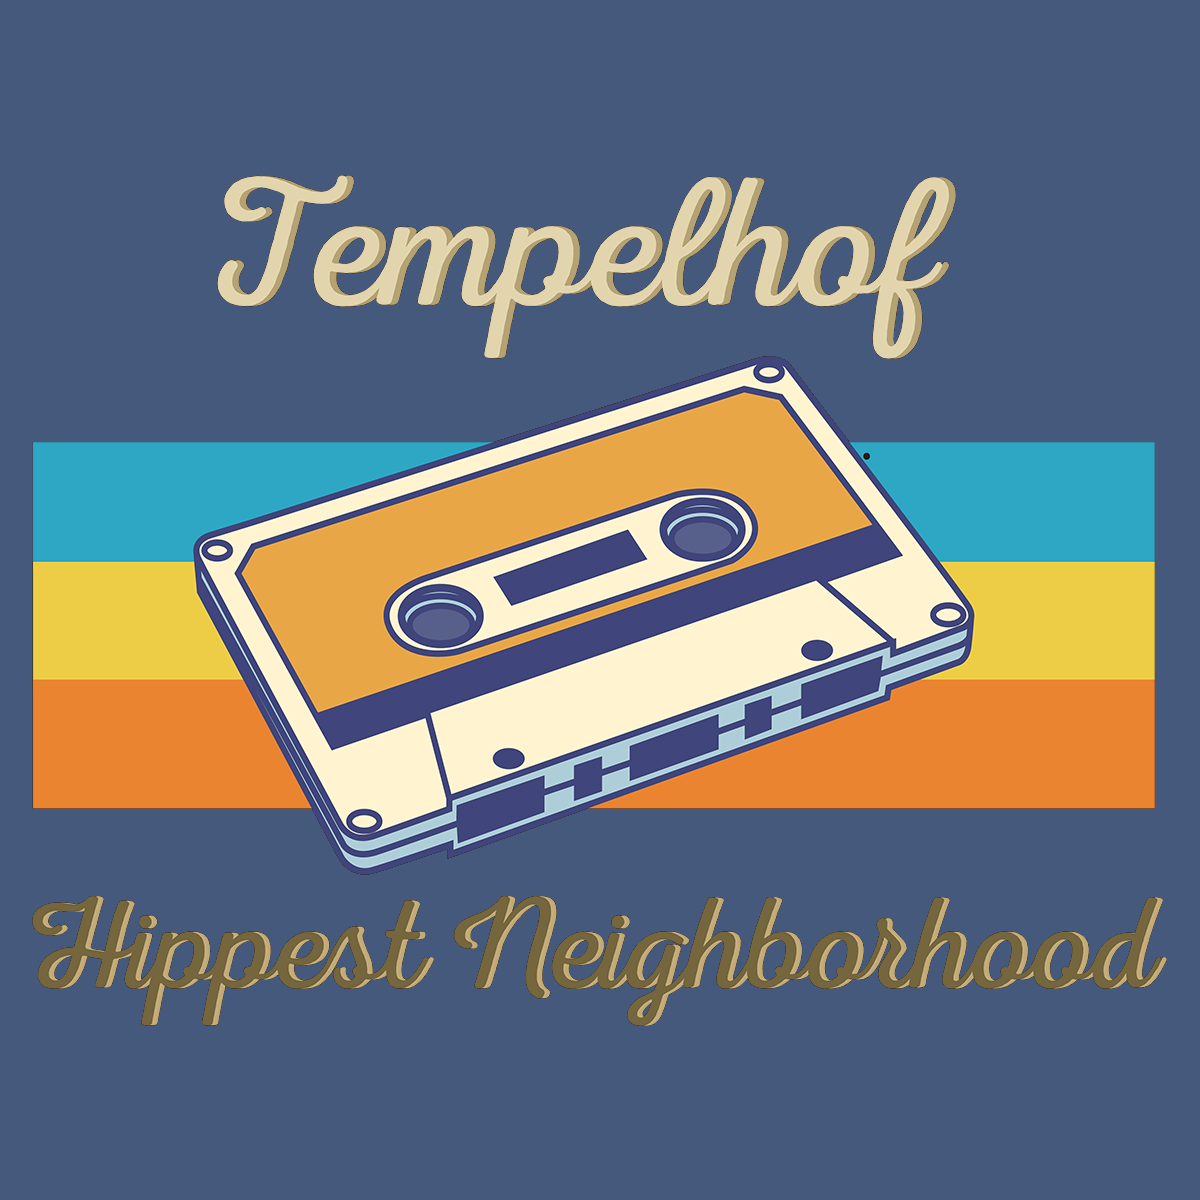 Tempelhof Hippest Neighborhood